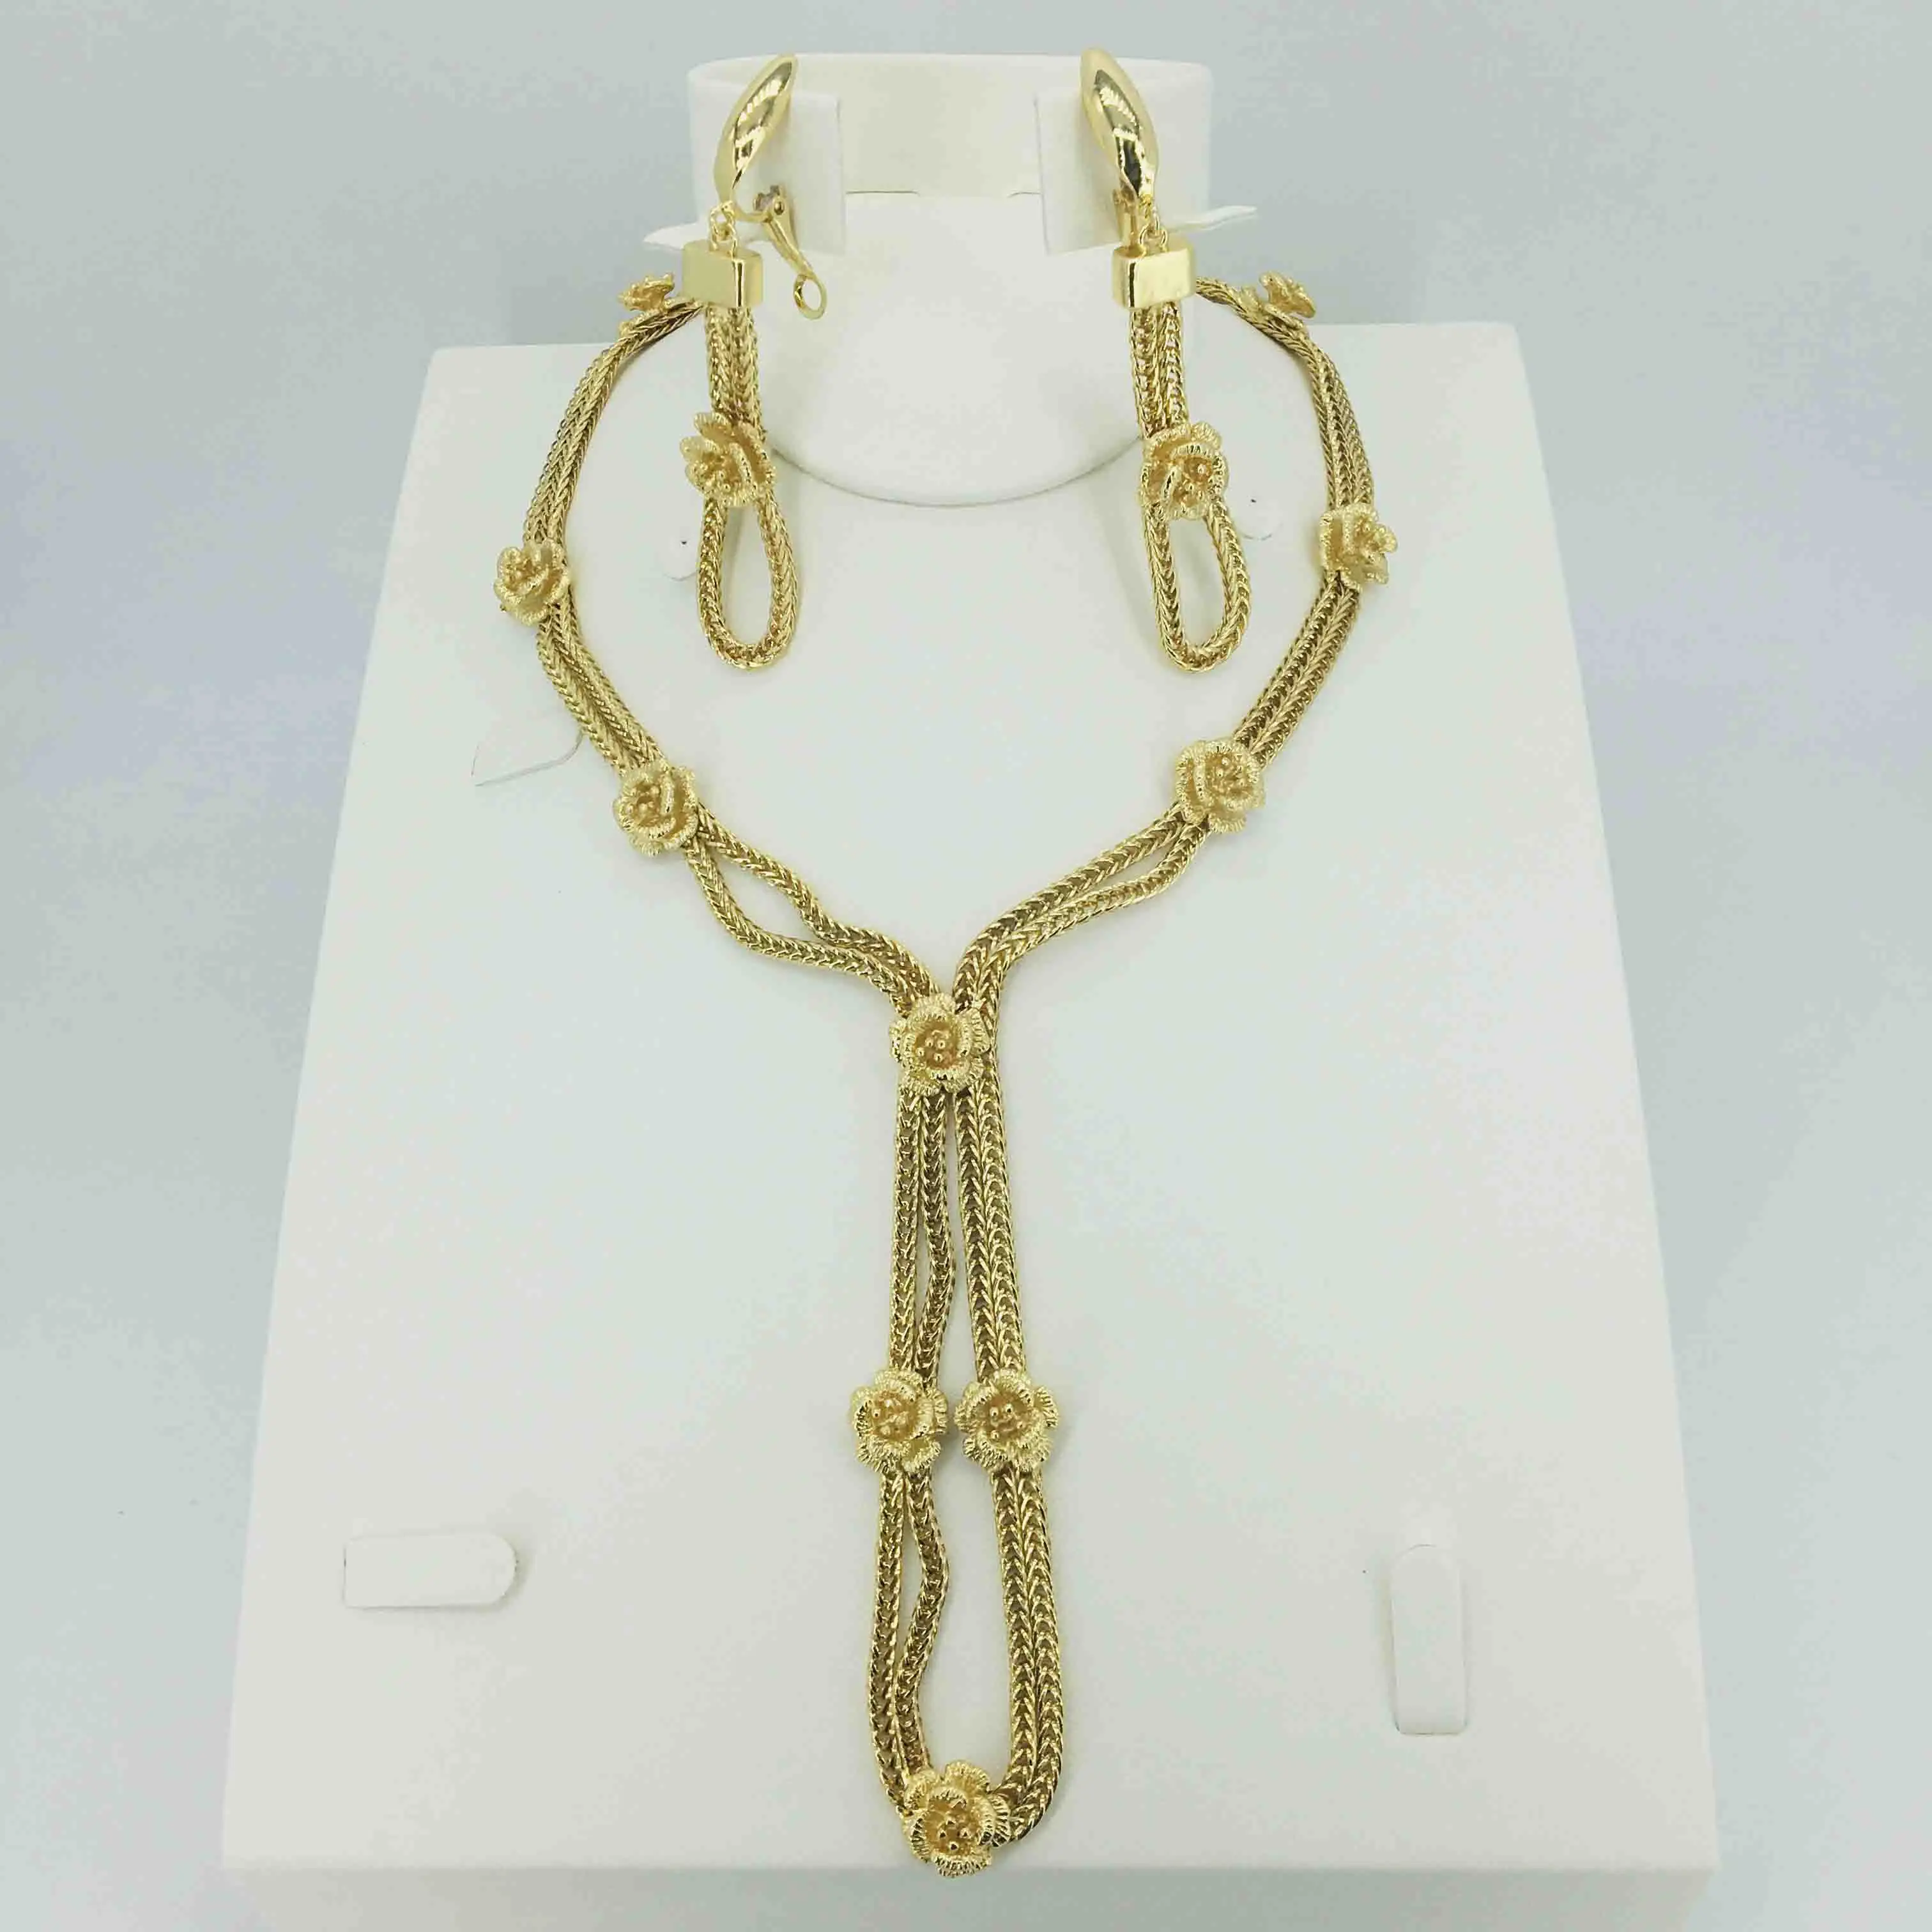 

Wholesale new dubai gold jewelry women's fashion necklace boutique jewelry set wedding necklace 24k gold design necklace